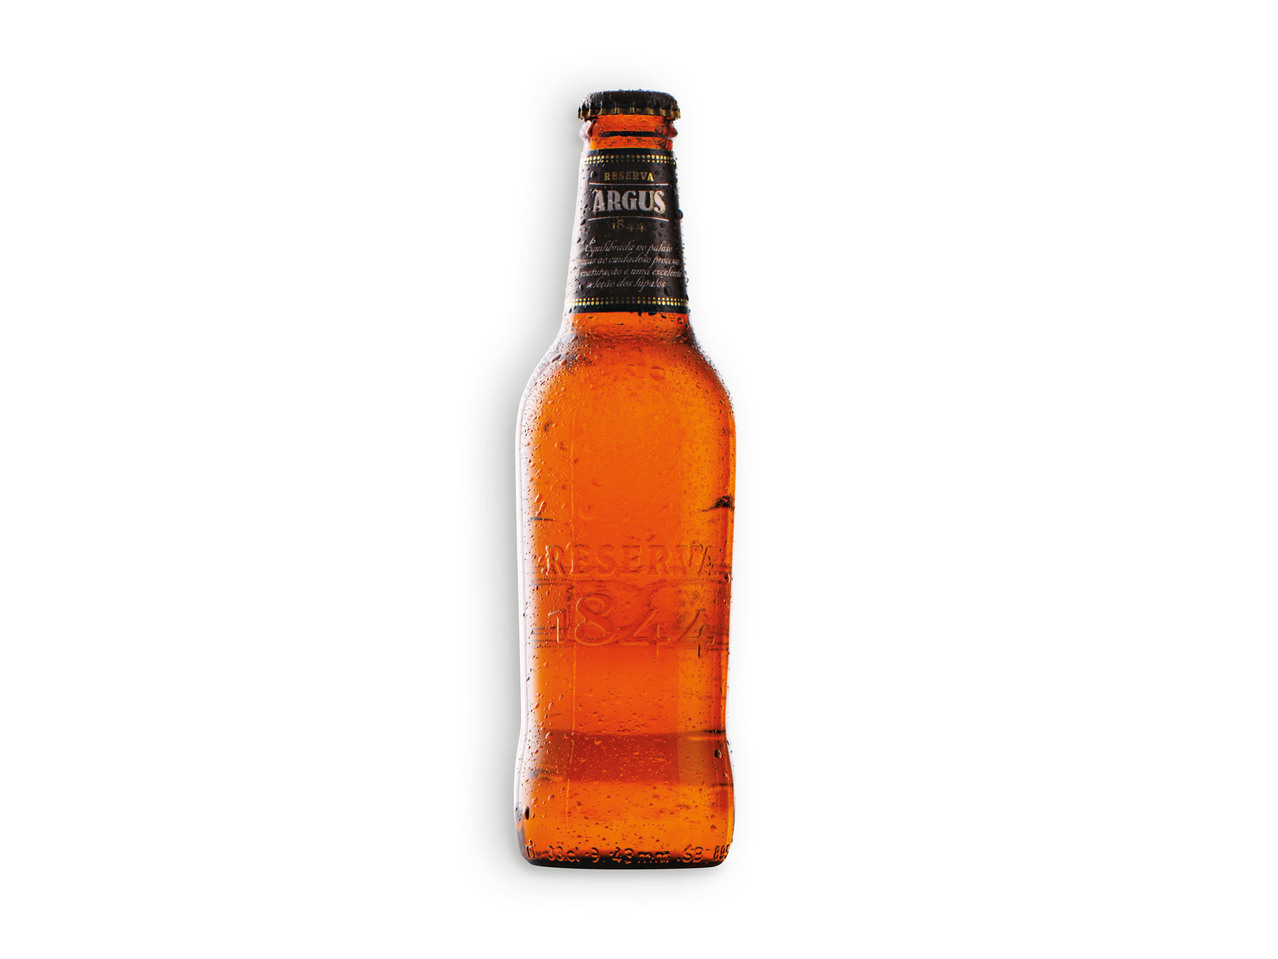 ARGUS(R) Cerveja Especial Reserva 1844